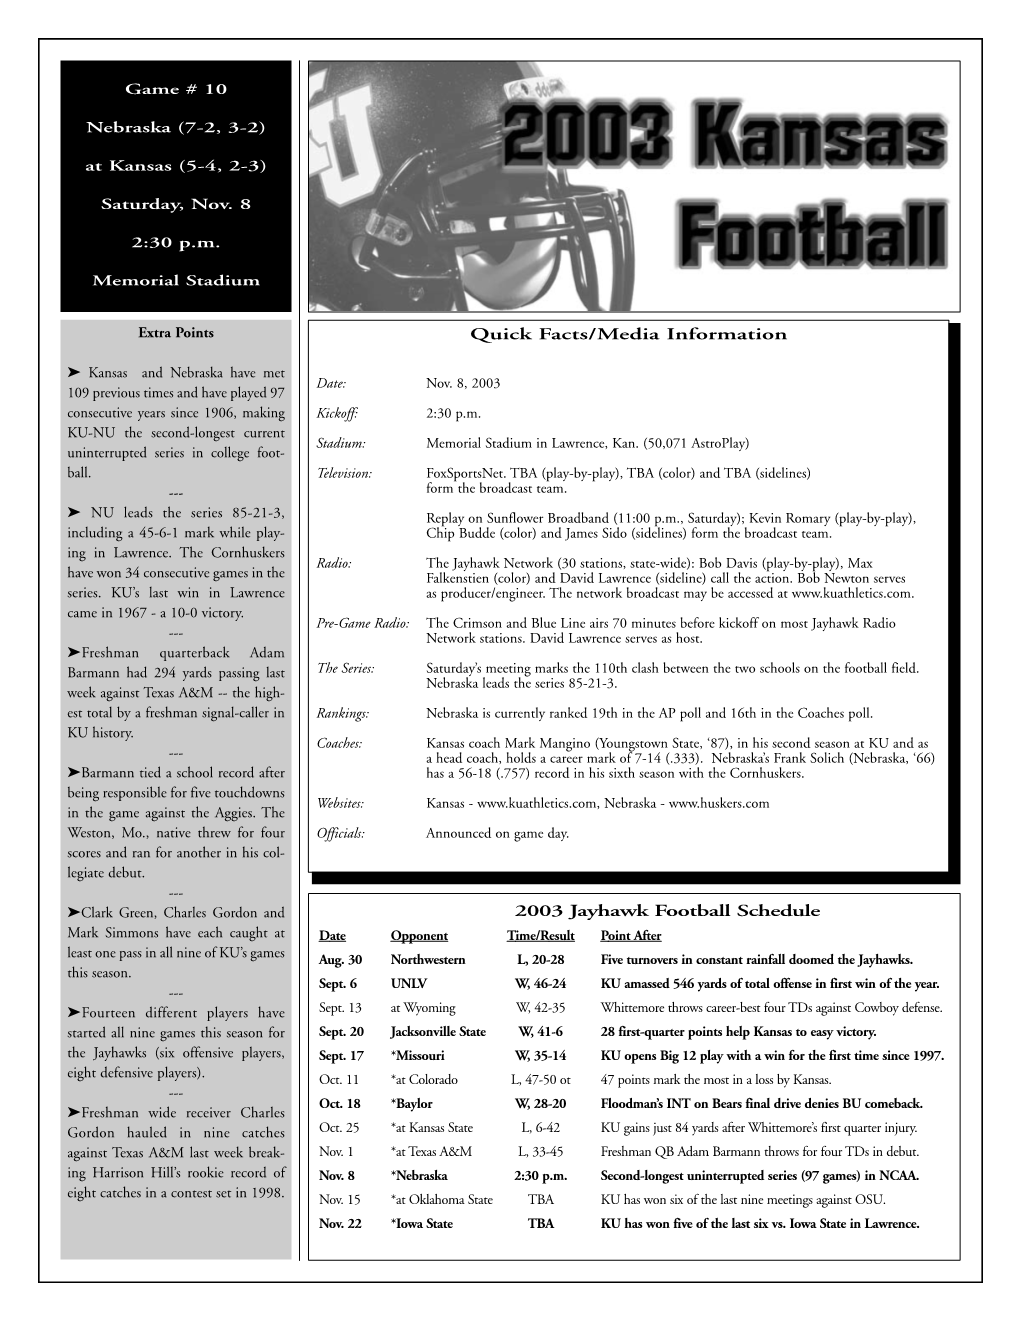 2003 Jayhawk Football Schedule Quick Facts/Media